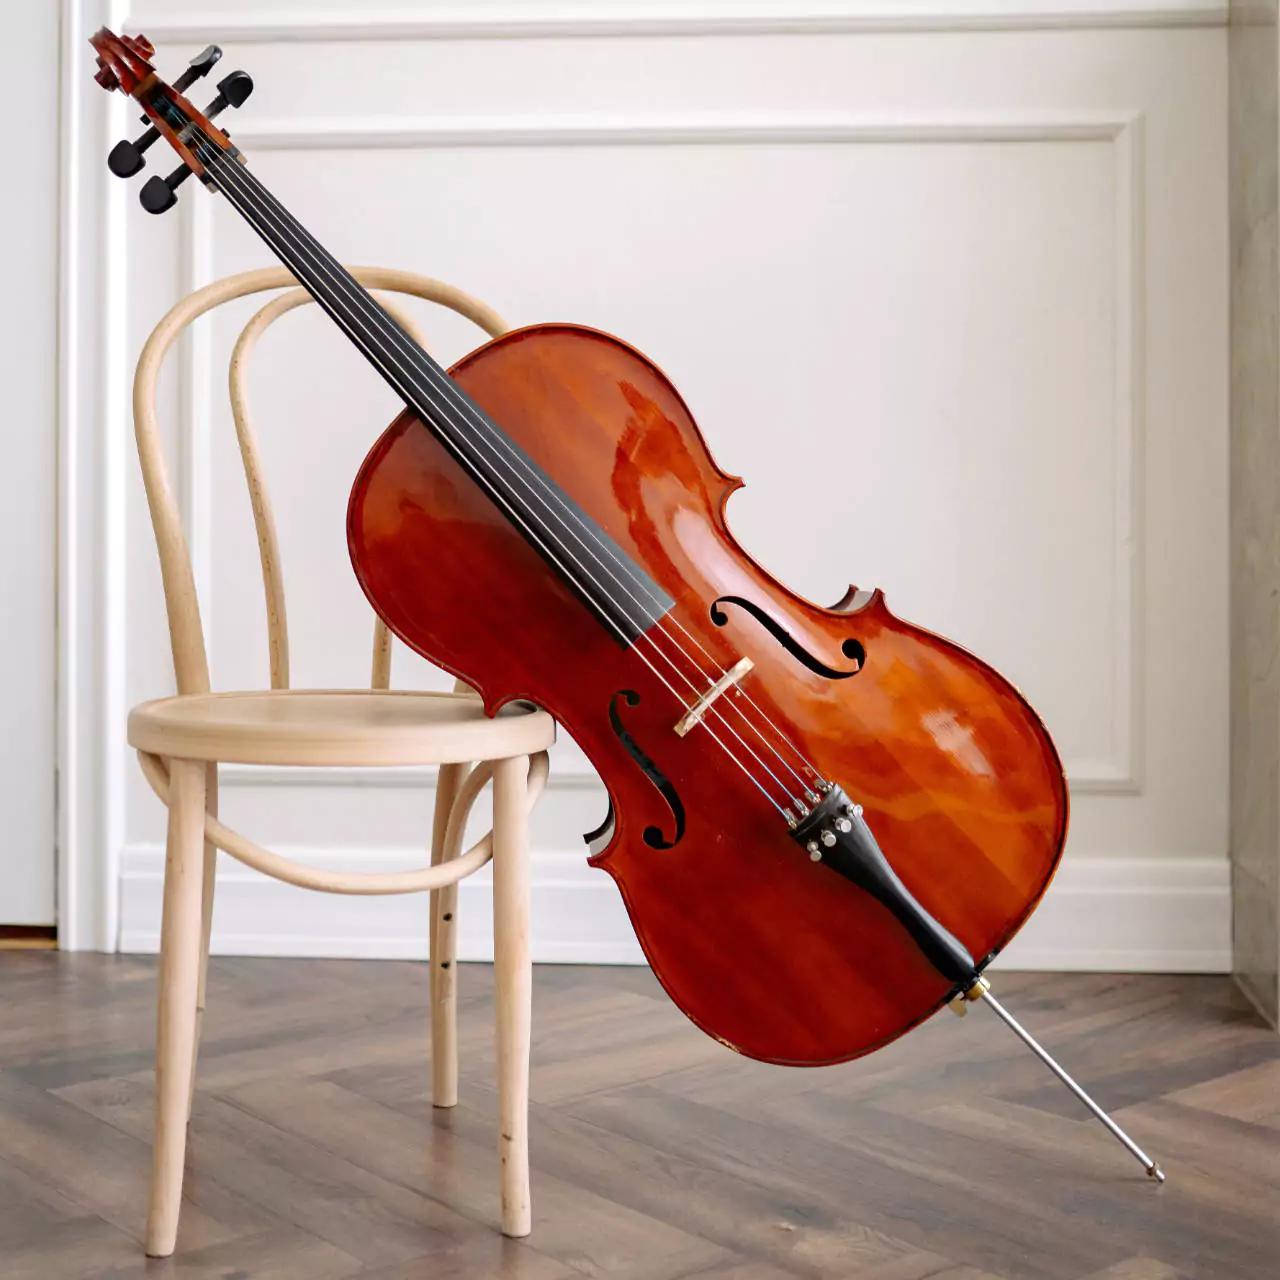 violín chelo - Cómo se dice violonchelo o chelo